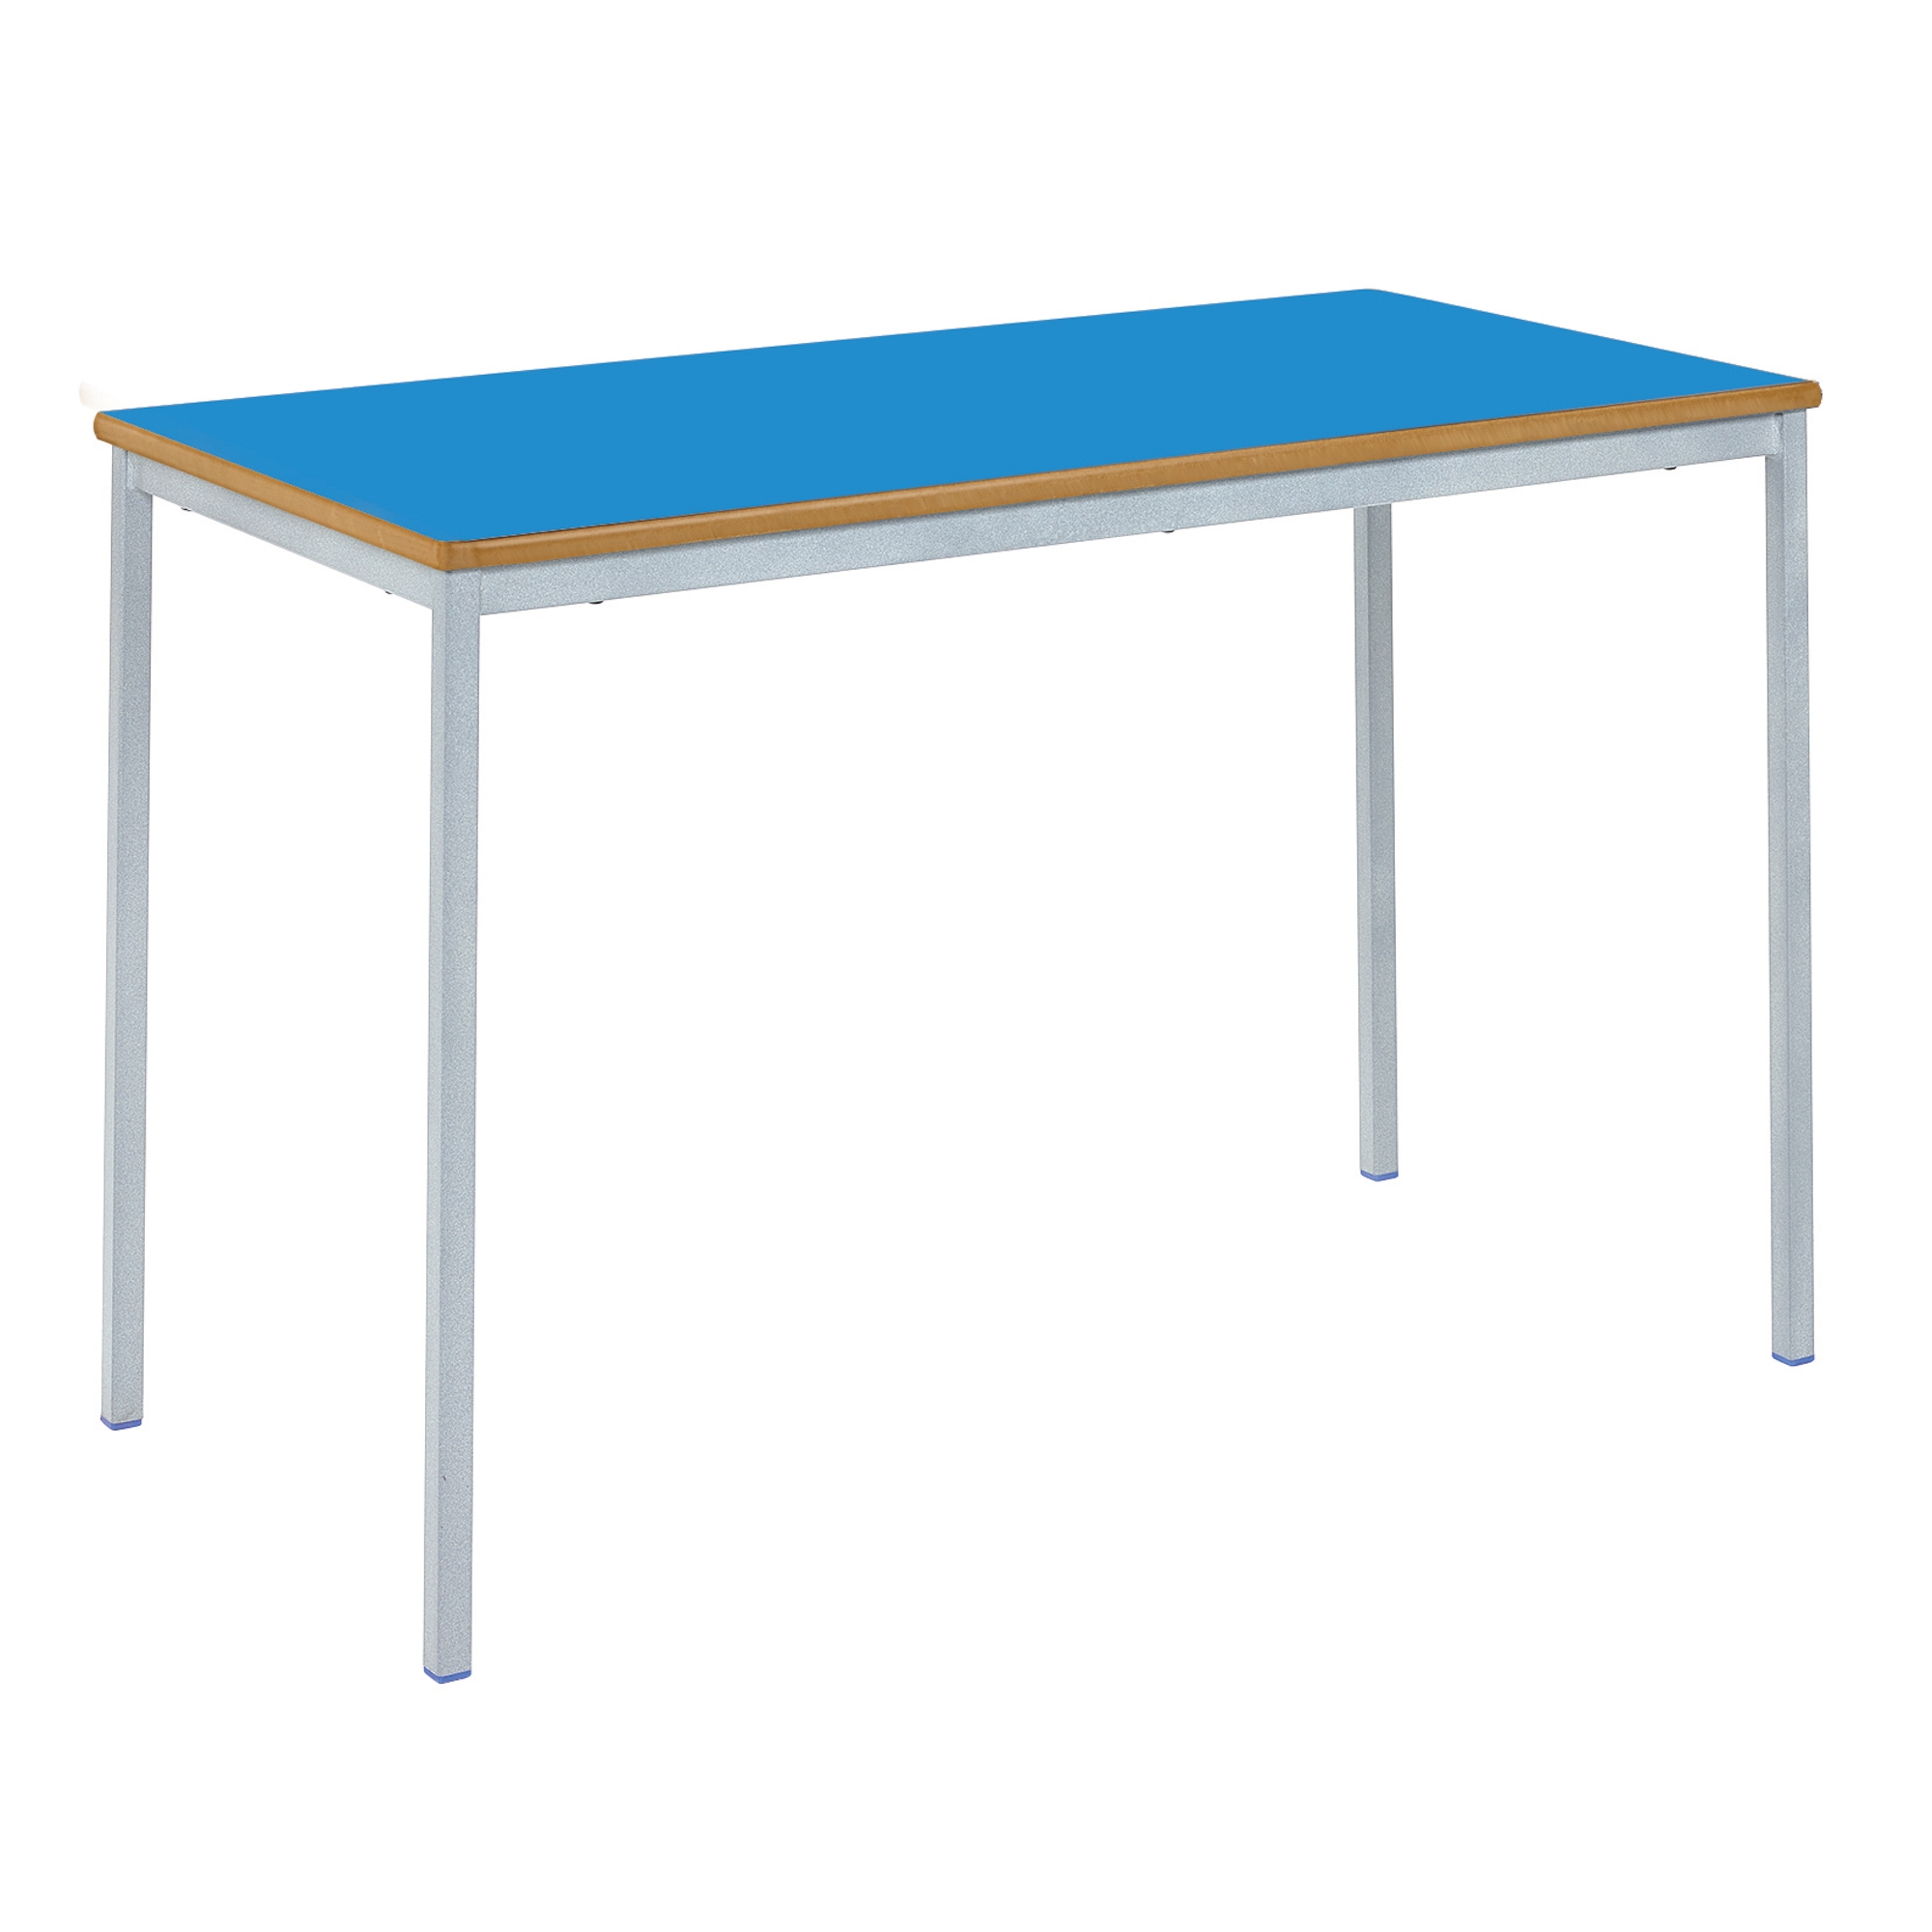 Classmates Rectangular Fully Welded Classroom Table - 1100 x 550 x 460mm - Blue